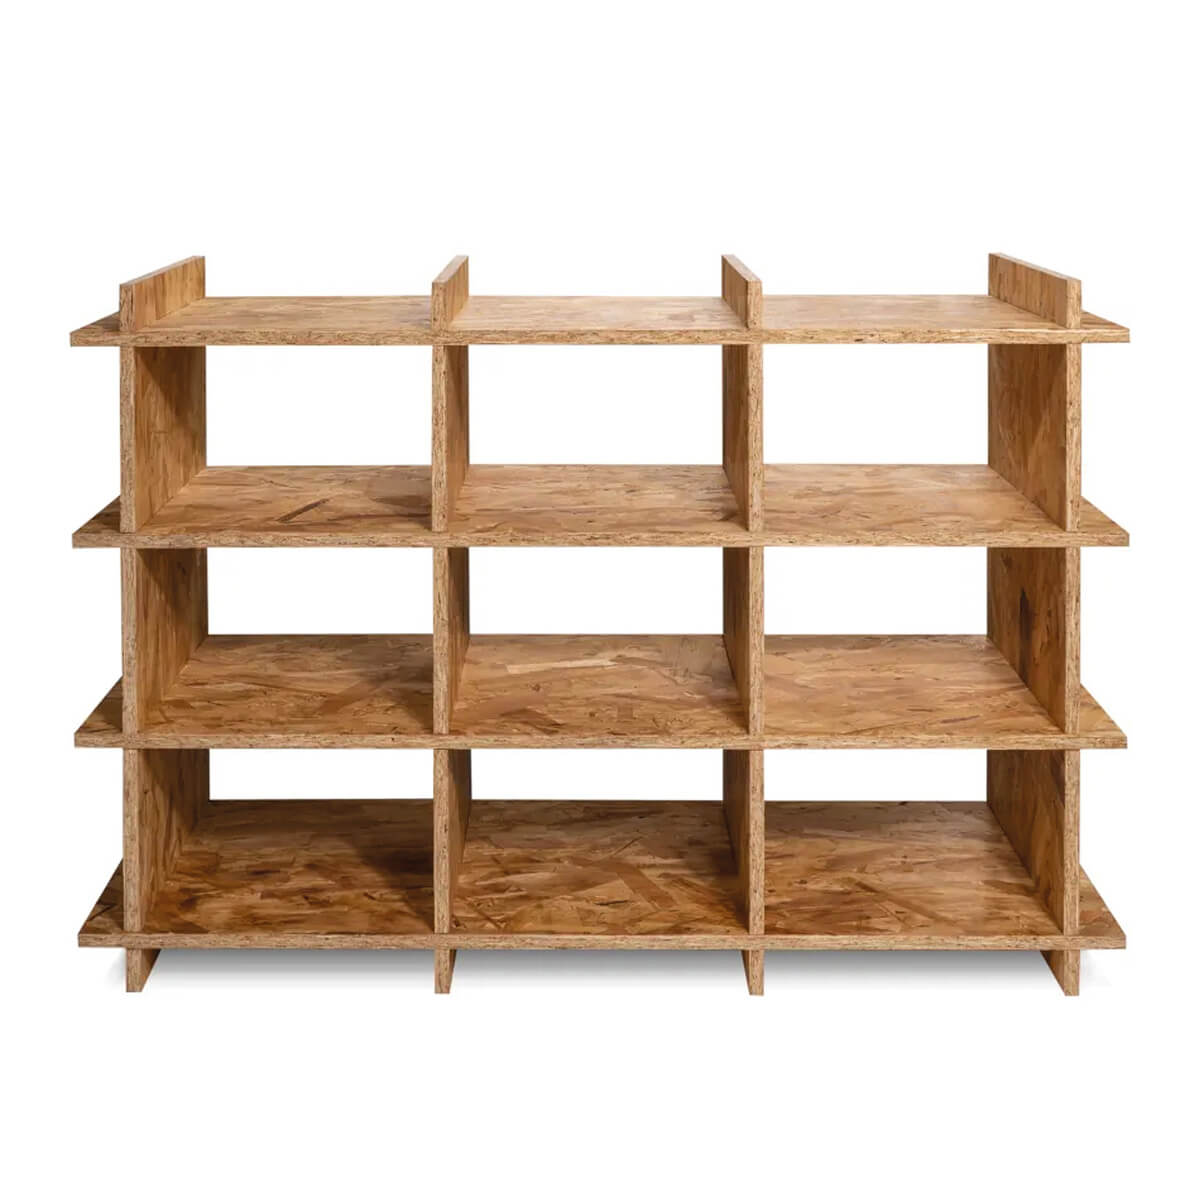 Handcrafted Multi-Purpose Wooden Shelf - Rustic Home Decor